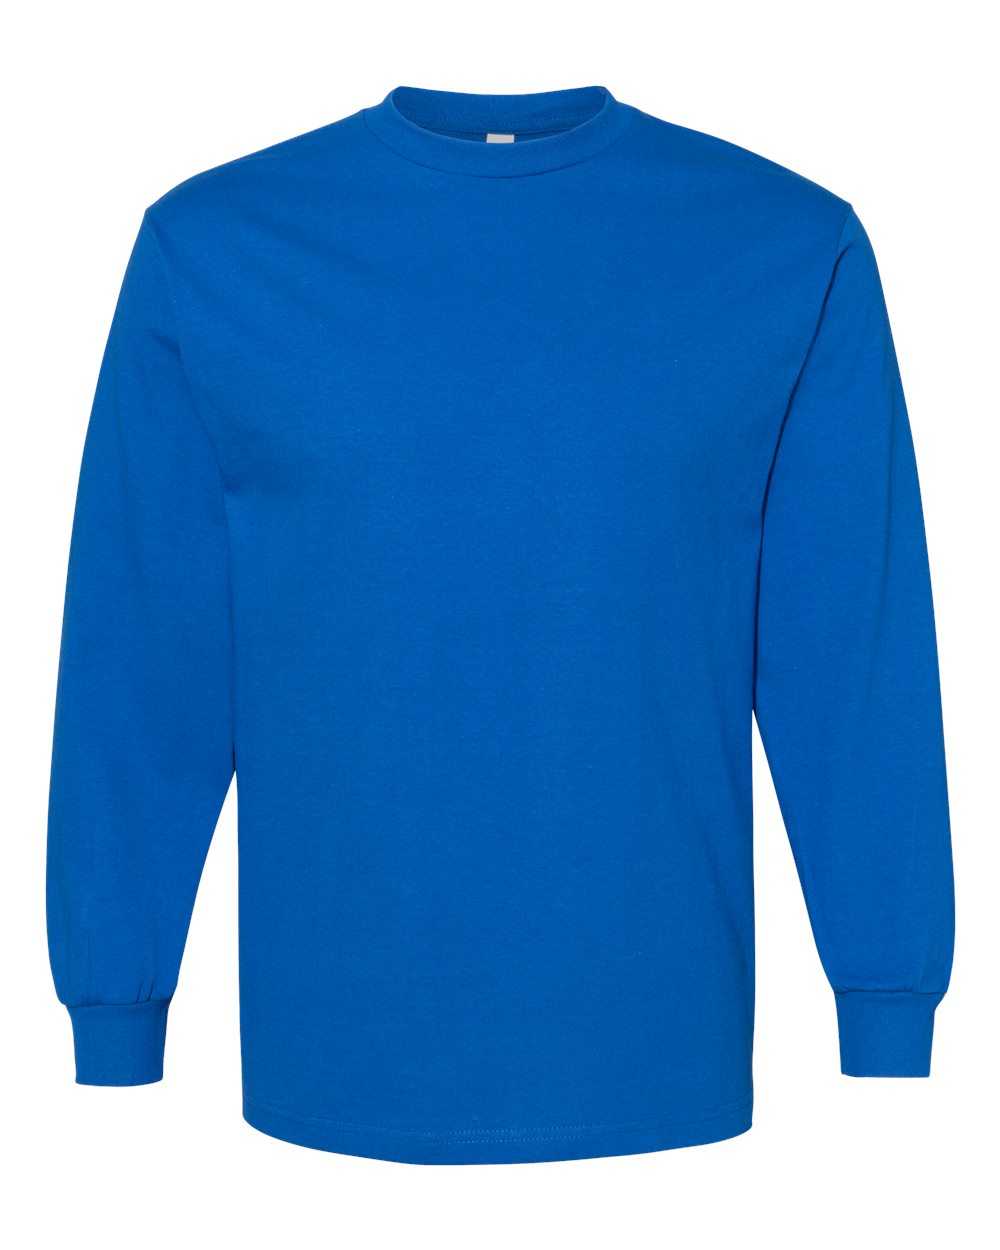 American Apparel 1304 Unisex Heavyweight Cotton Long Sleeve T-Shirt - Royal - HIT a Double